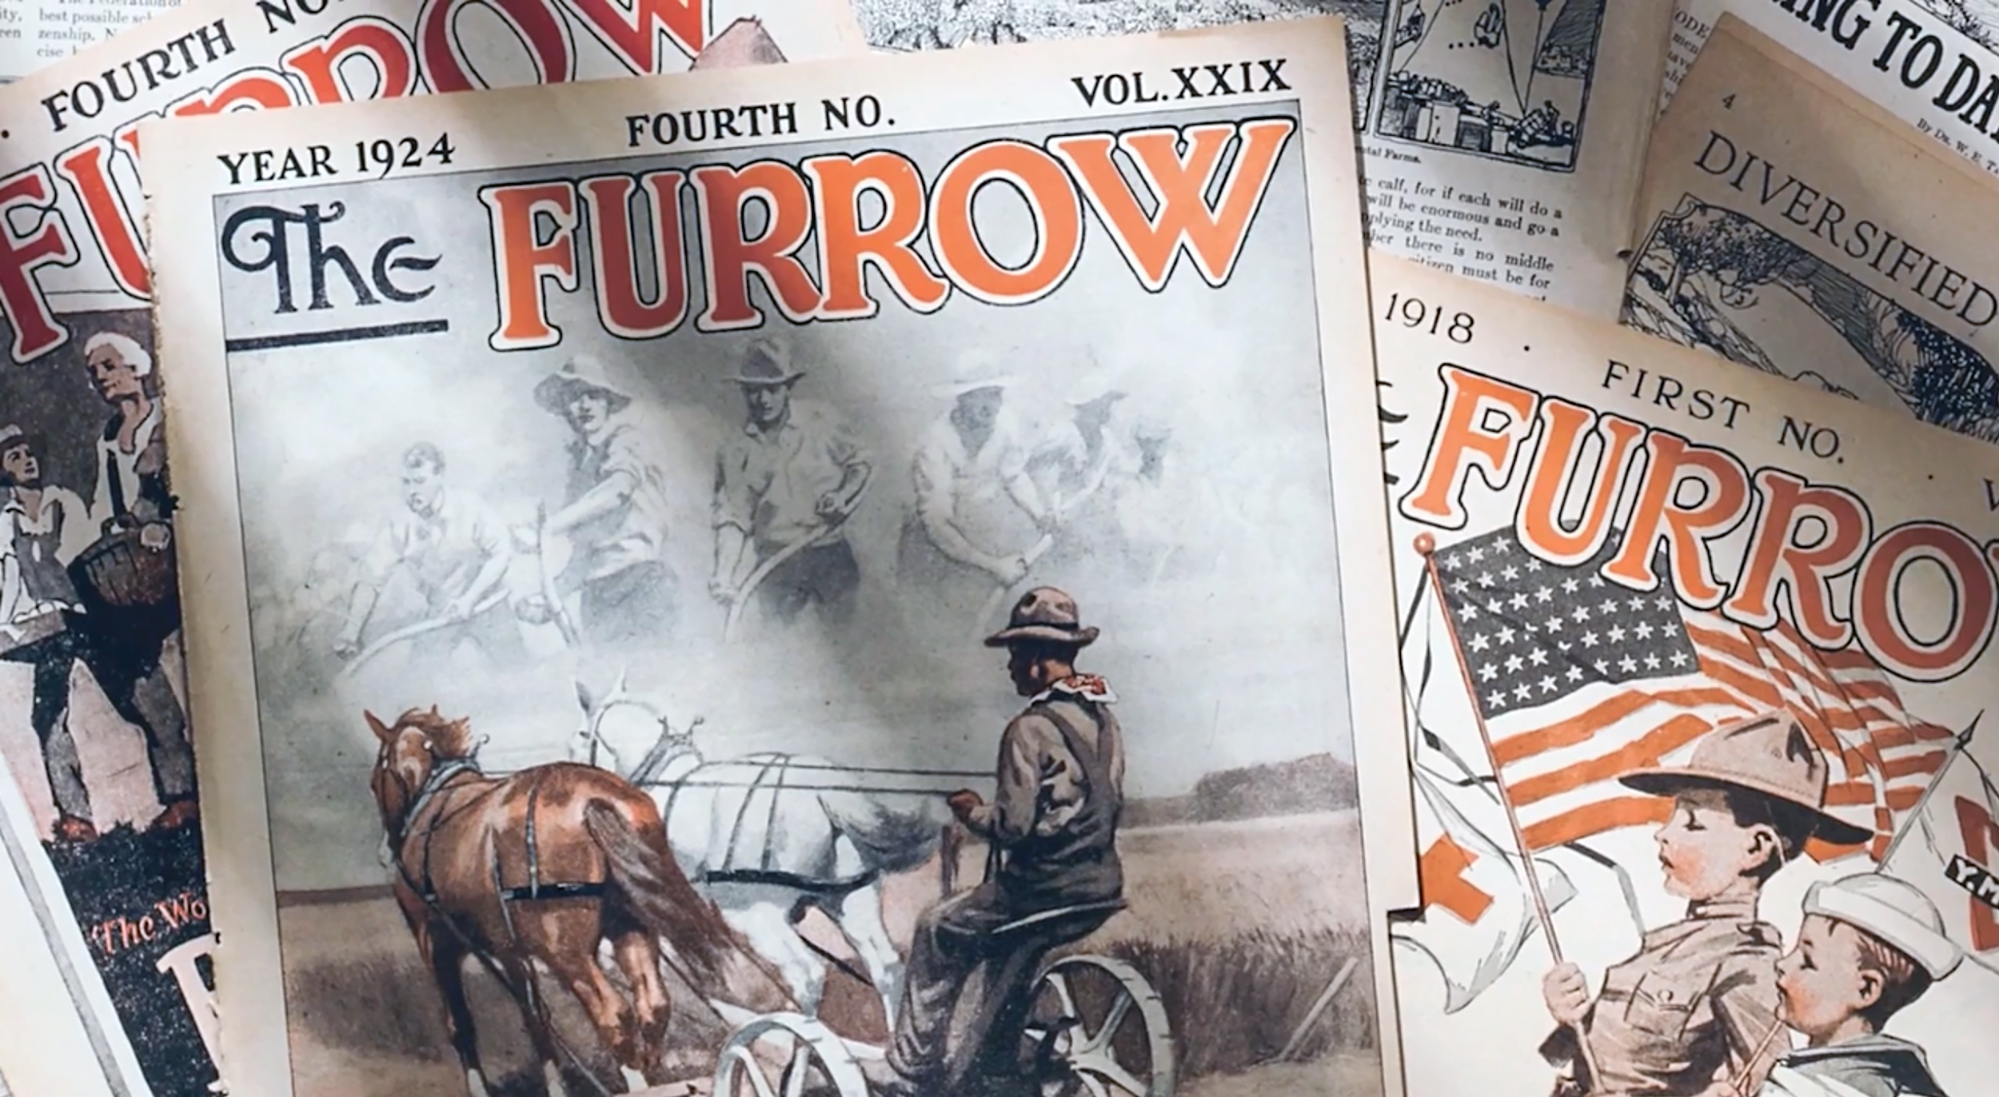 John Deere's The Furrow, started in 1895